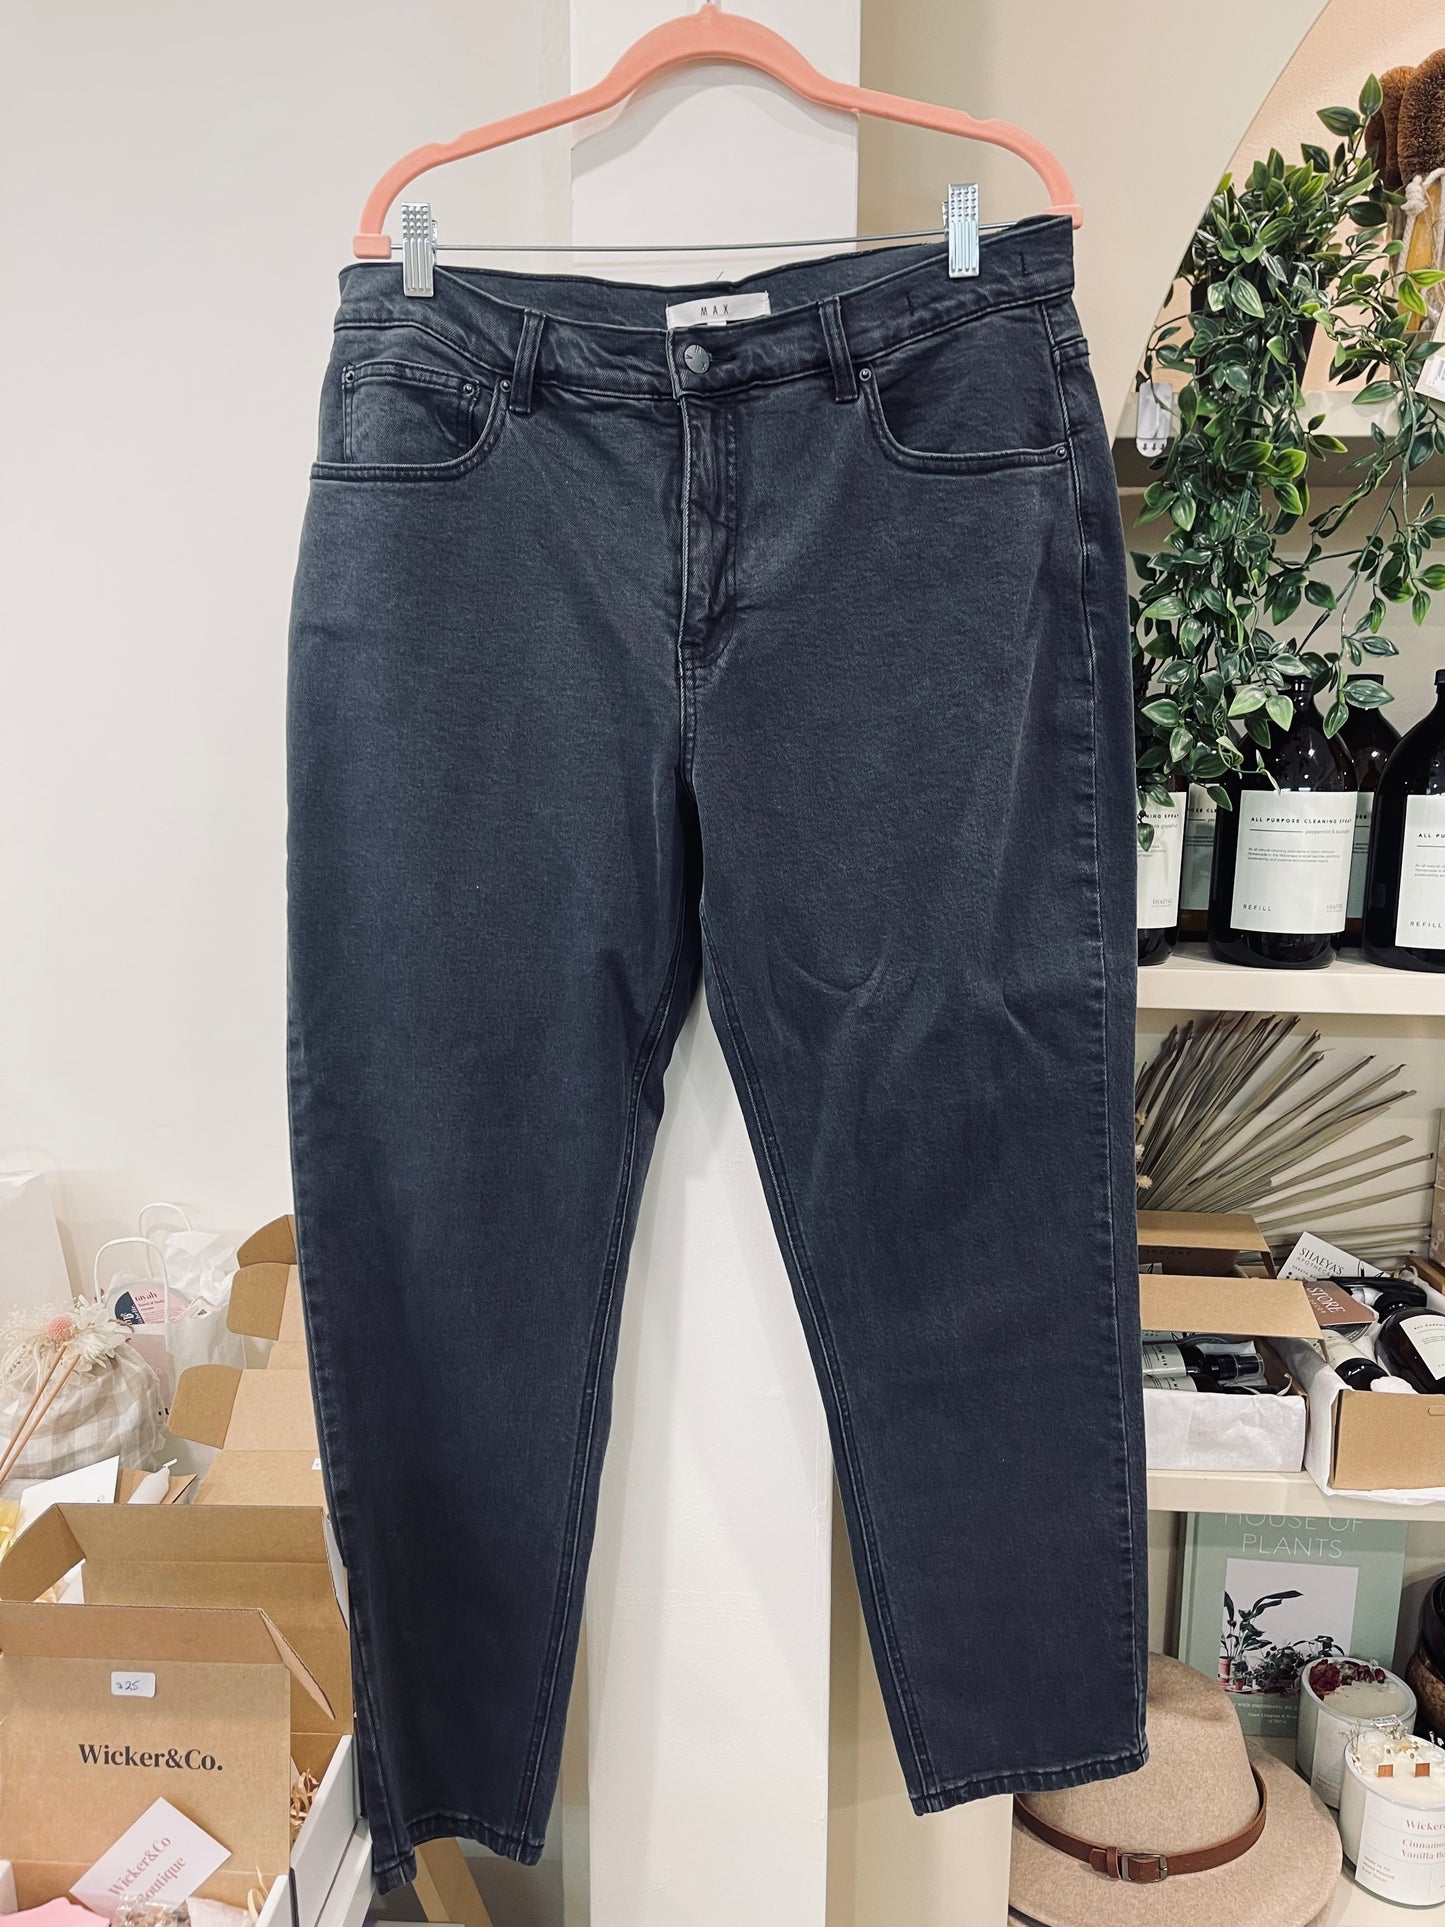 New High Waist Denim Jeans size 16